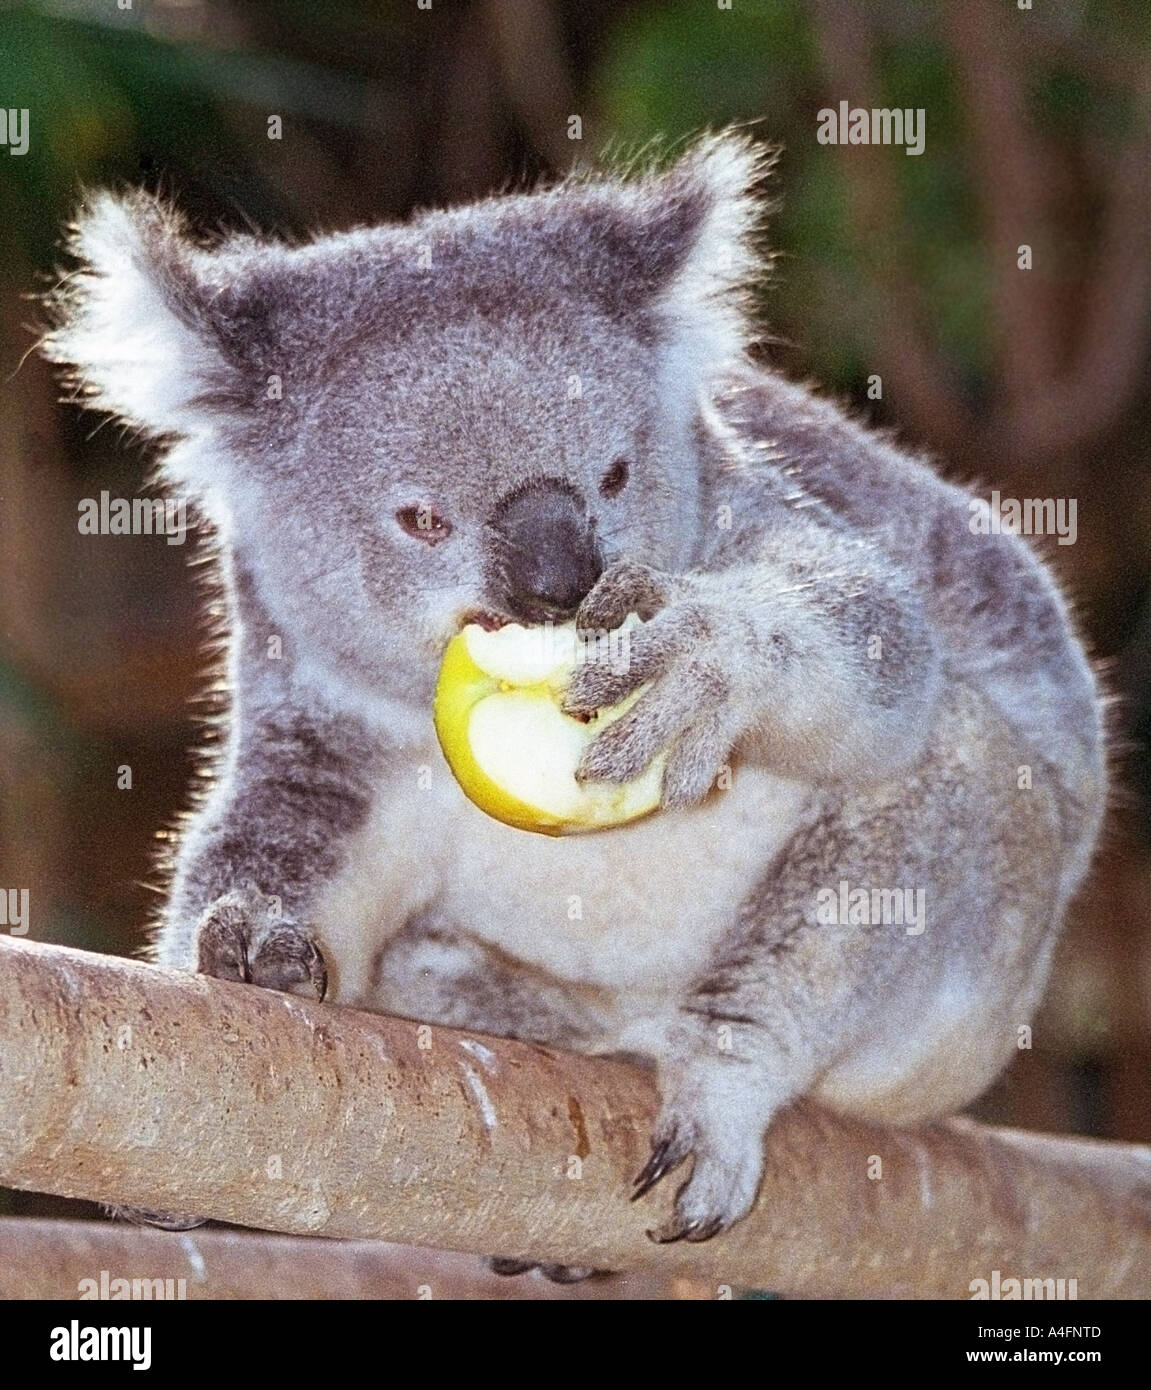 koala-eating-apple-very-rare-A4FNTD.jpg